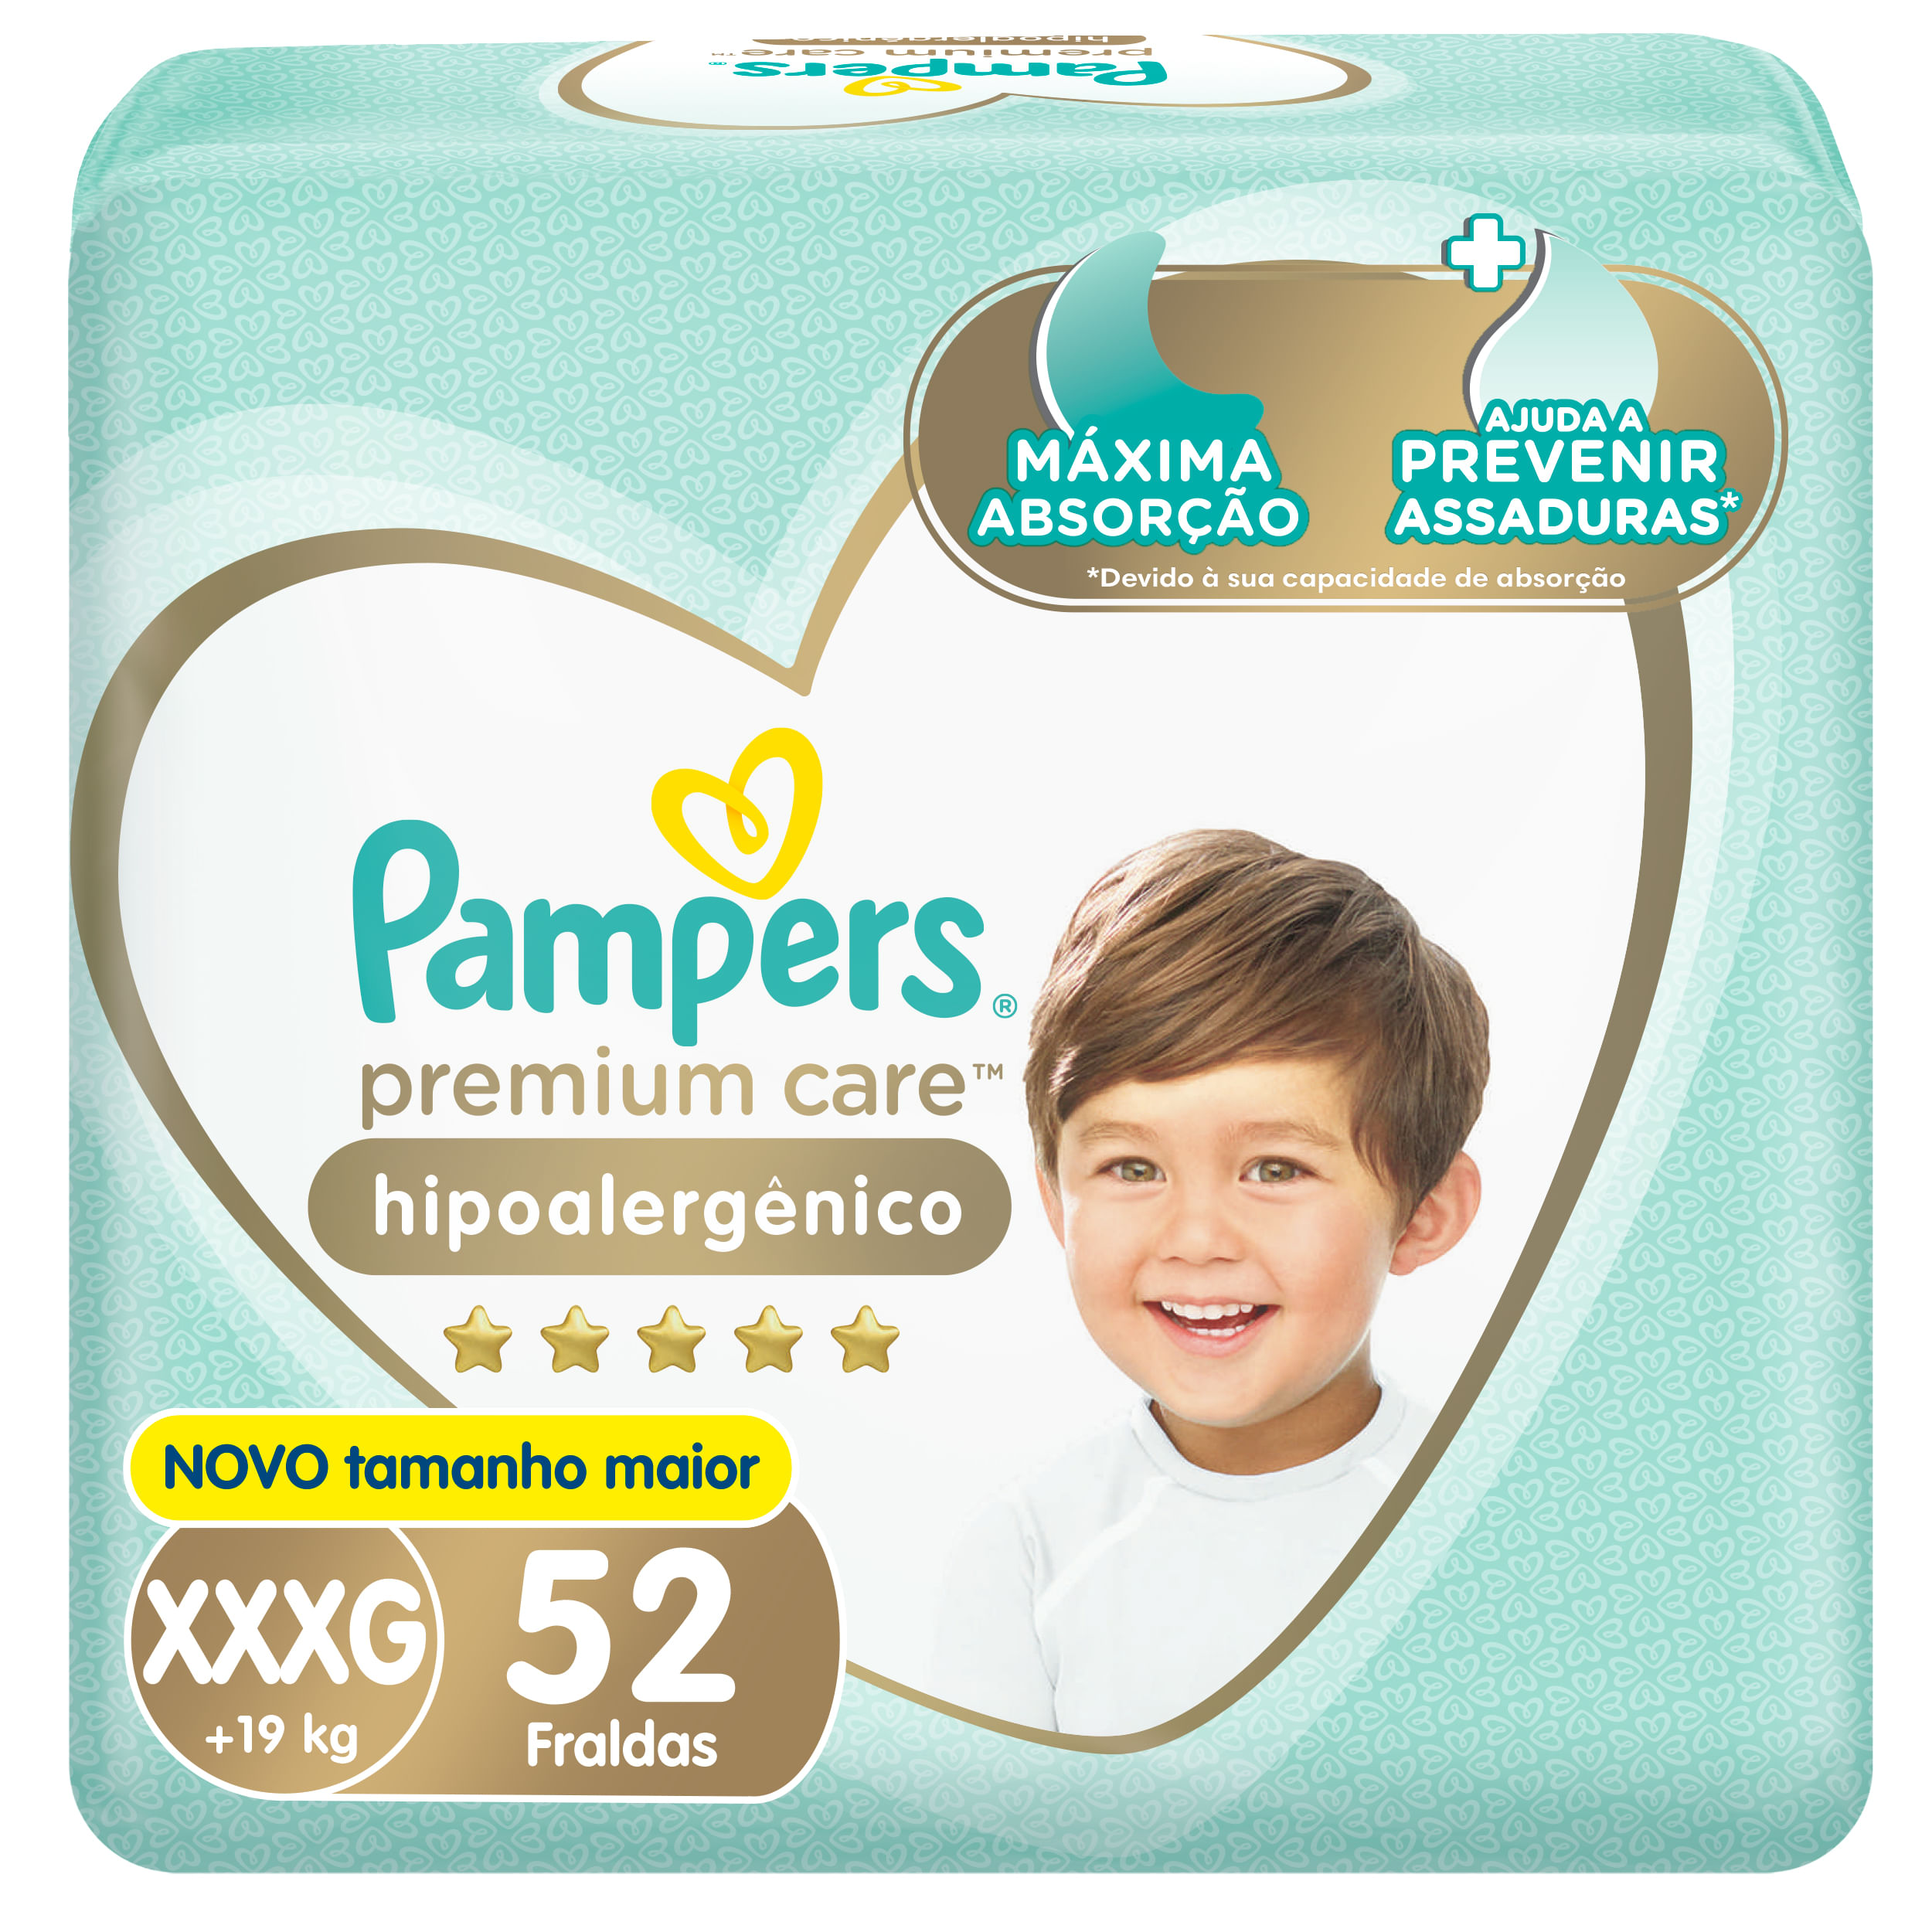 Pañales PAMPERS Premium Care Hipoalergénico Talla XXXG 52un